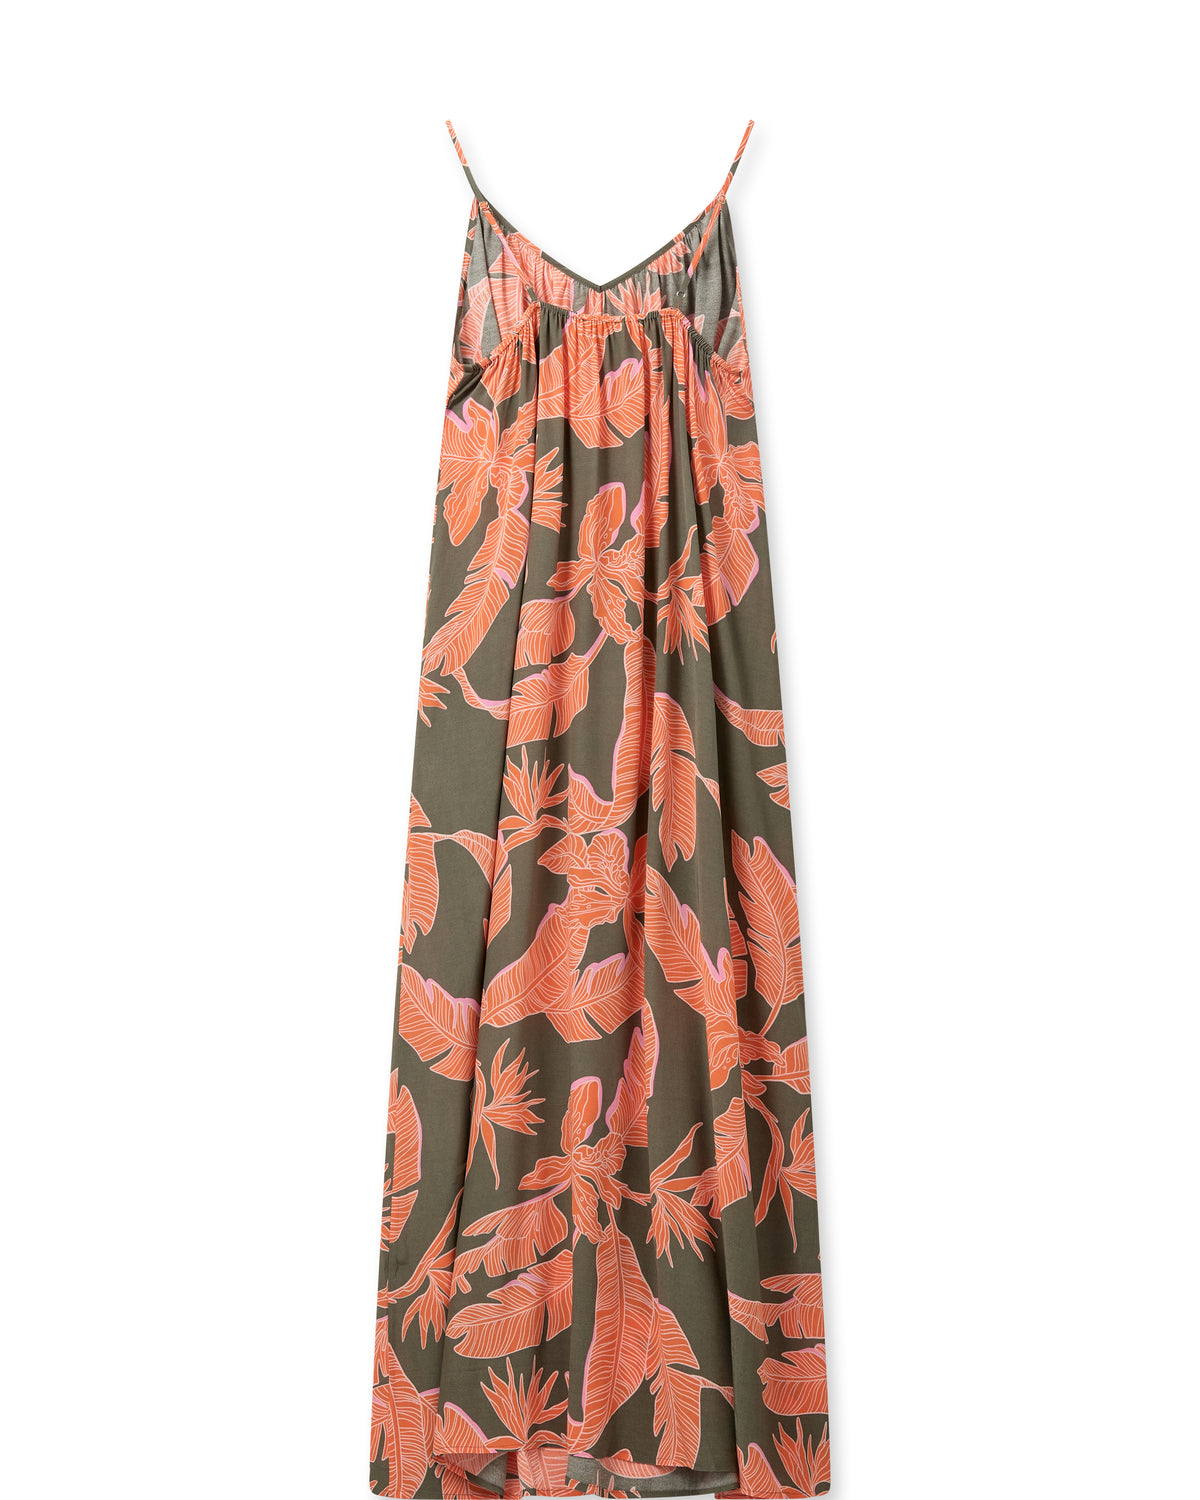 Khaki V neck summer dress with orange and pink palm tree leaf print